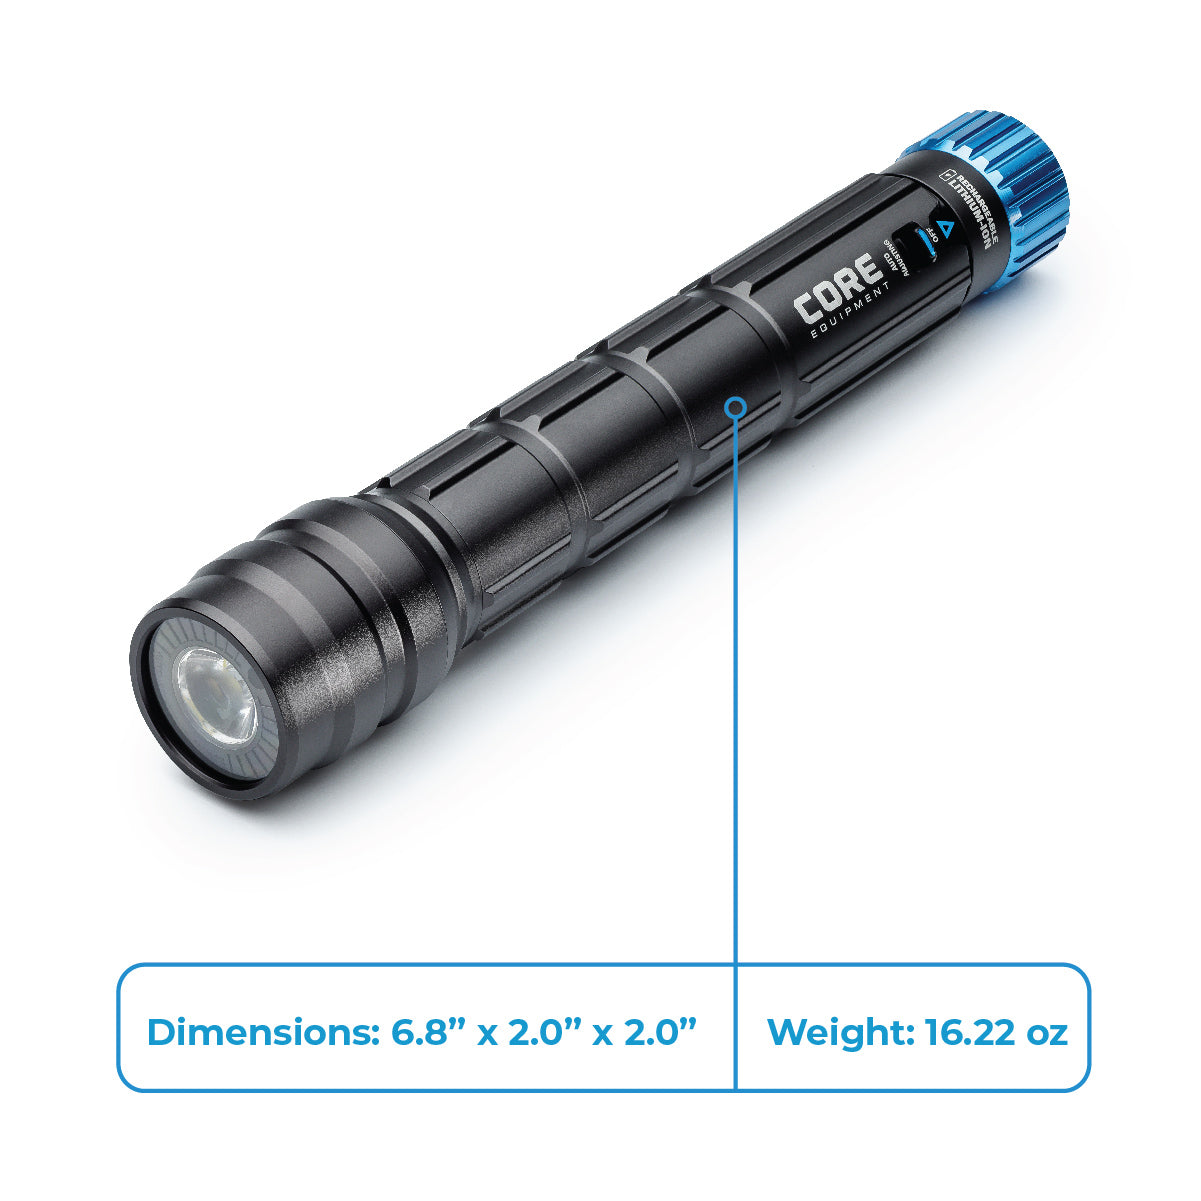 1500 Lumen Rechargeable Flashlight with Auto-Brightness